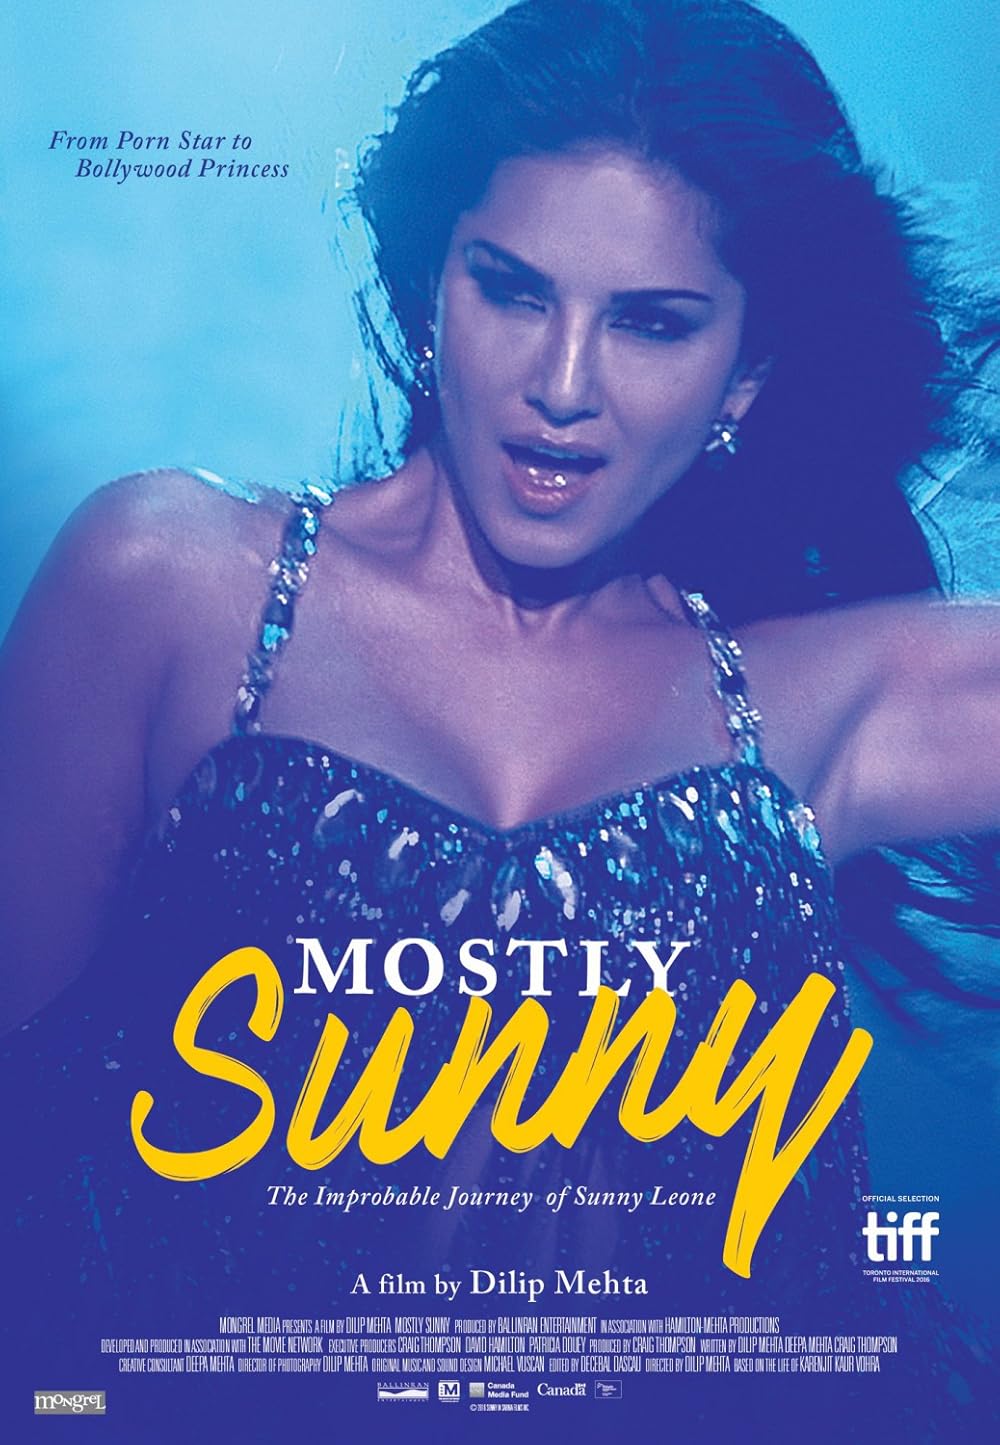 behnaz lajevardi recommends sunny leone sex movies pic